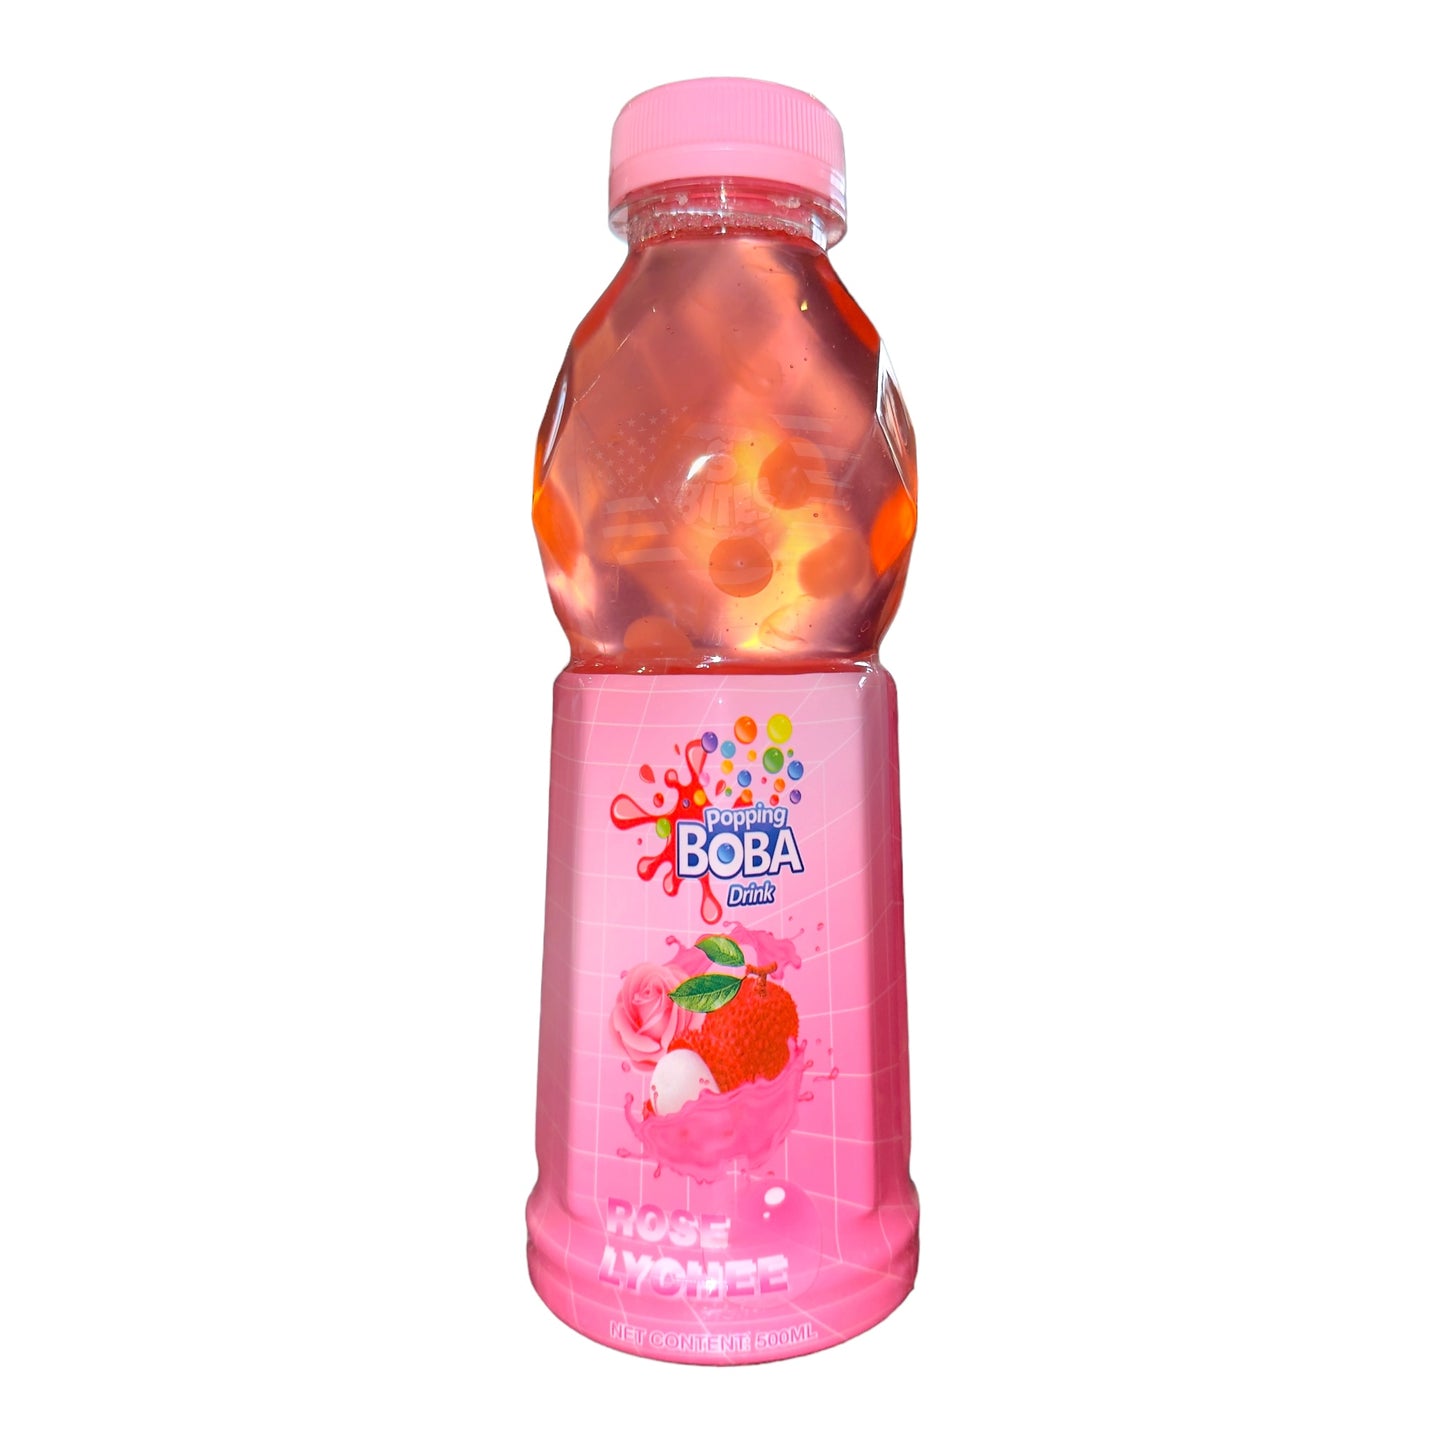 Popping Boba Drink Rose Lychee - 500ml